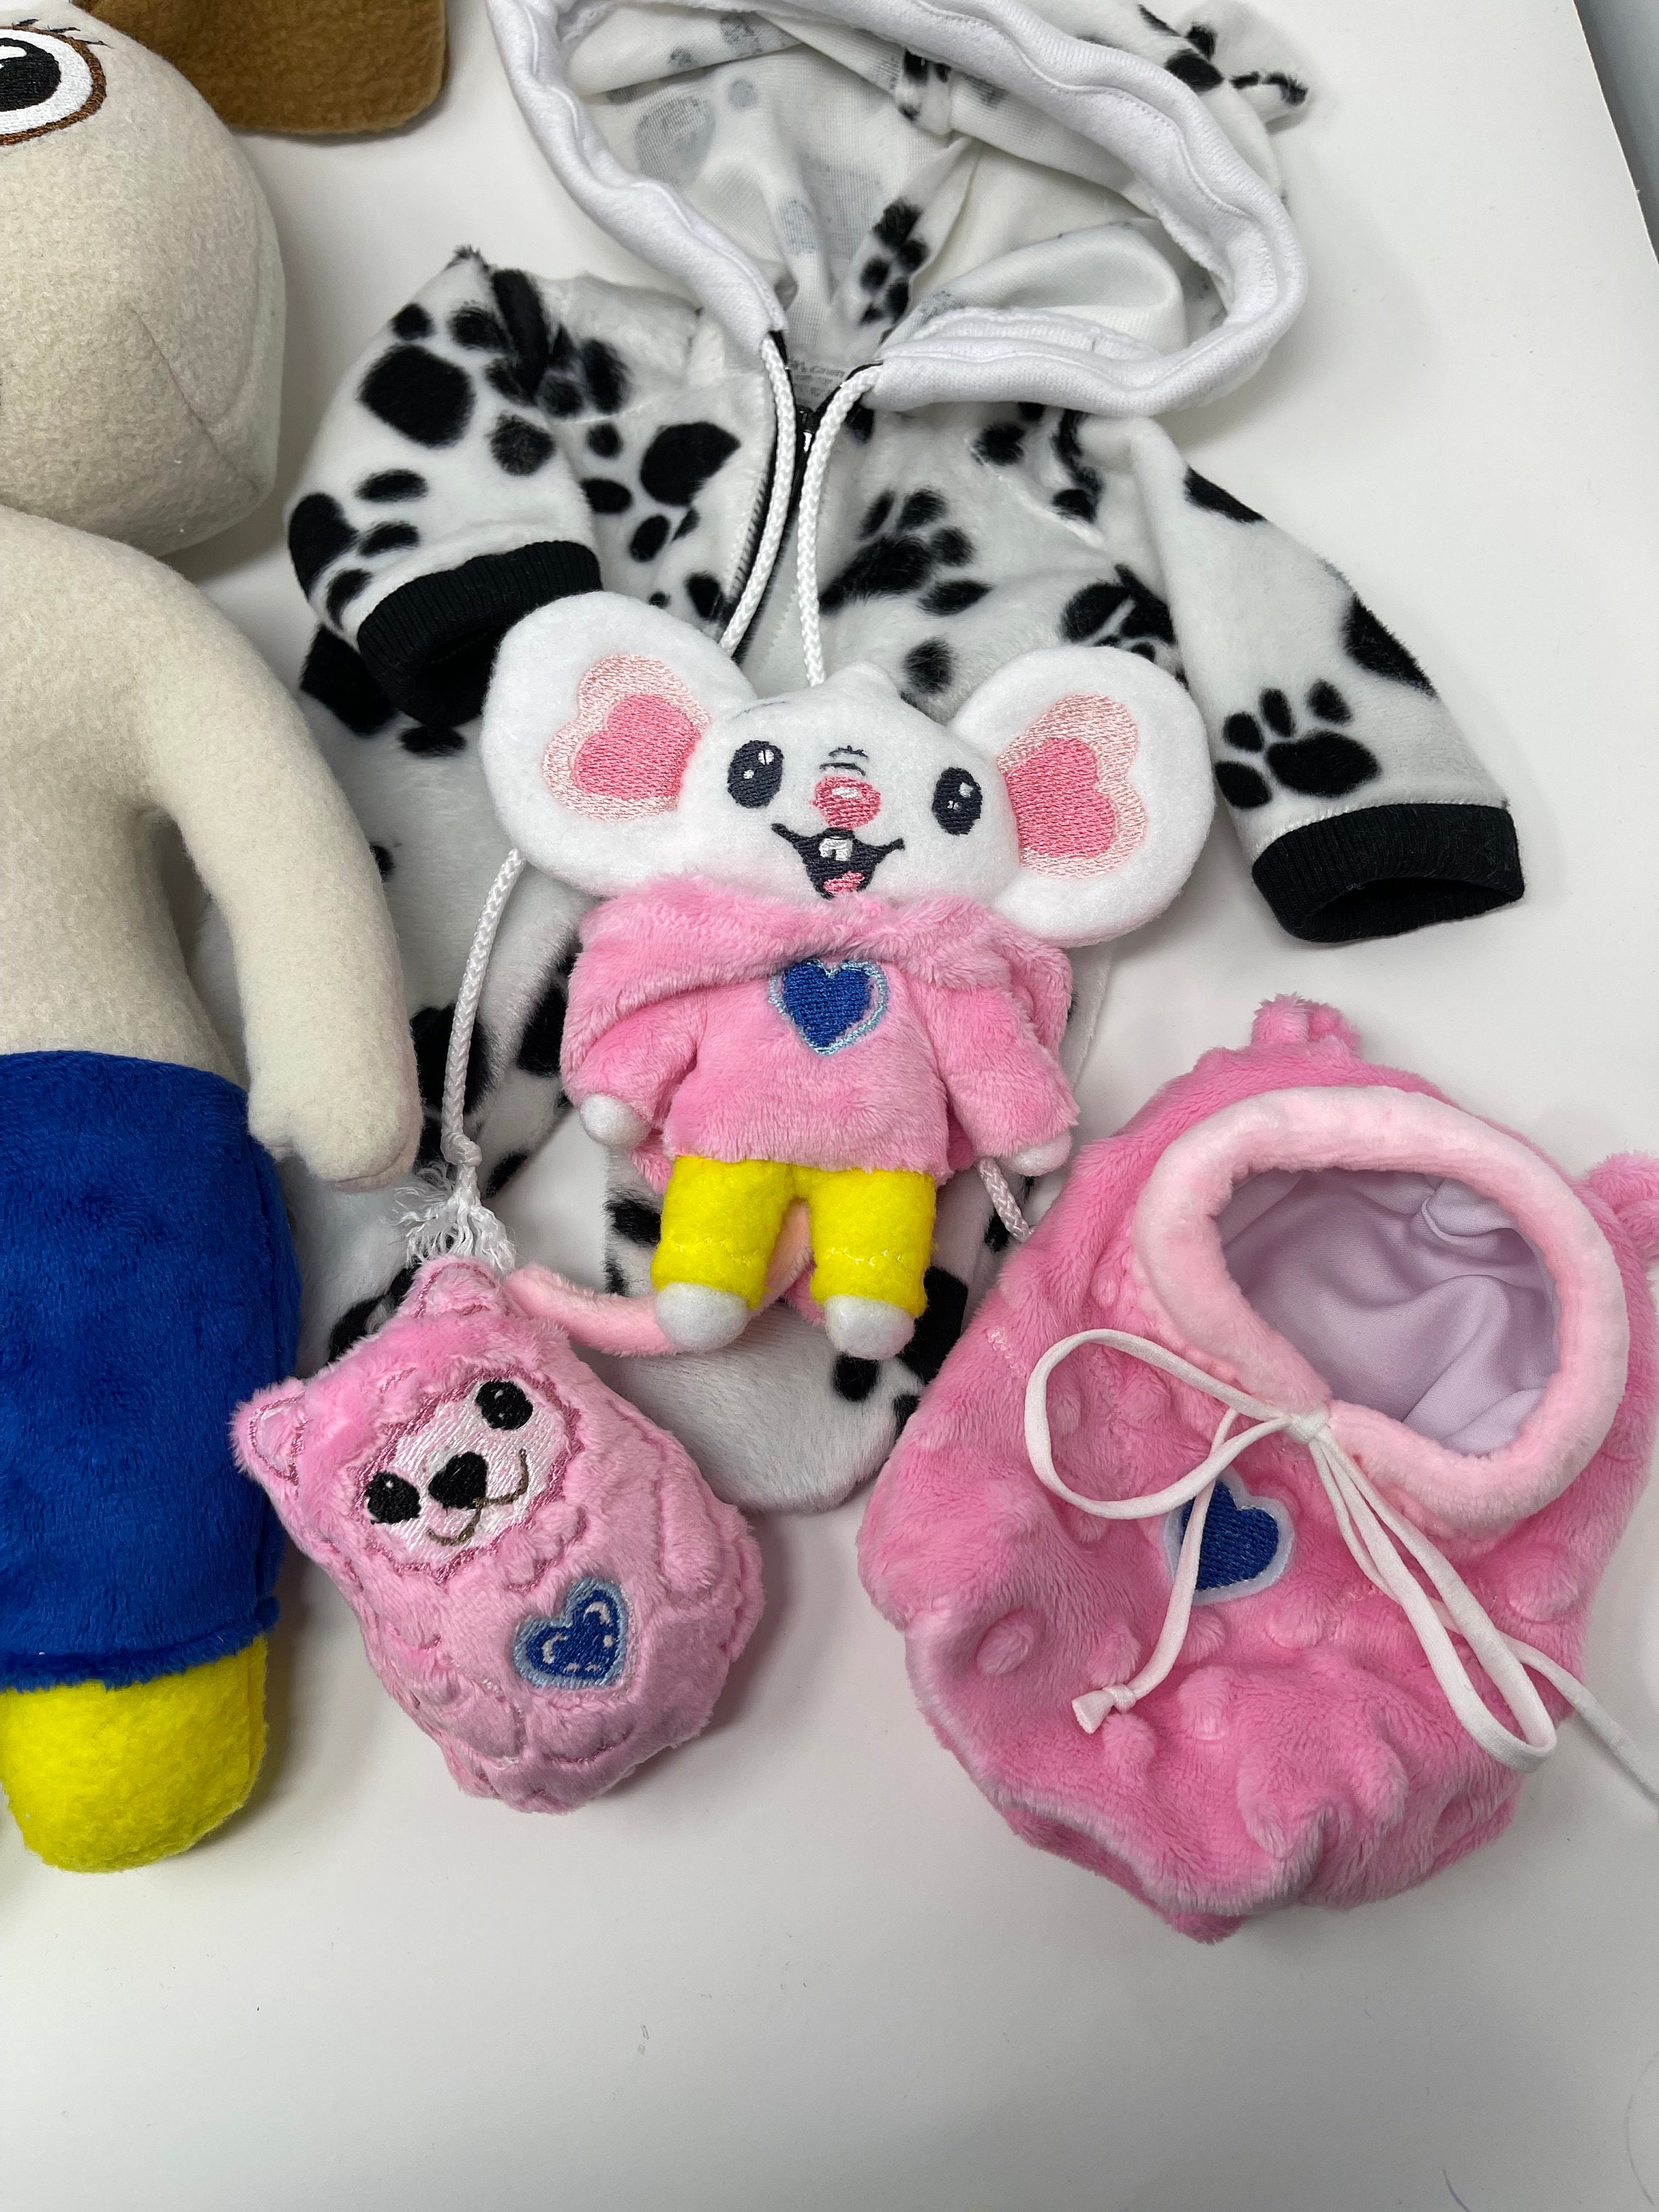 2pcs Chip and Potato Plush Toys Cartoon Pug Dog Plushie Animal Mouse Peluche Stuffed Animal Soft Toys for Kids